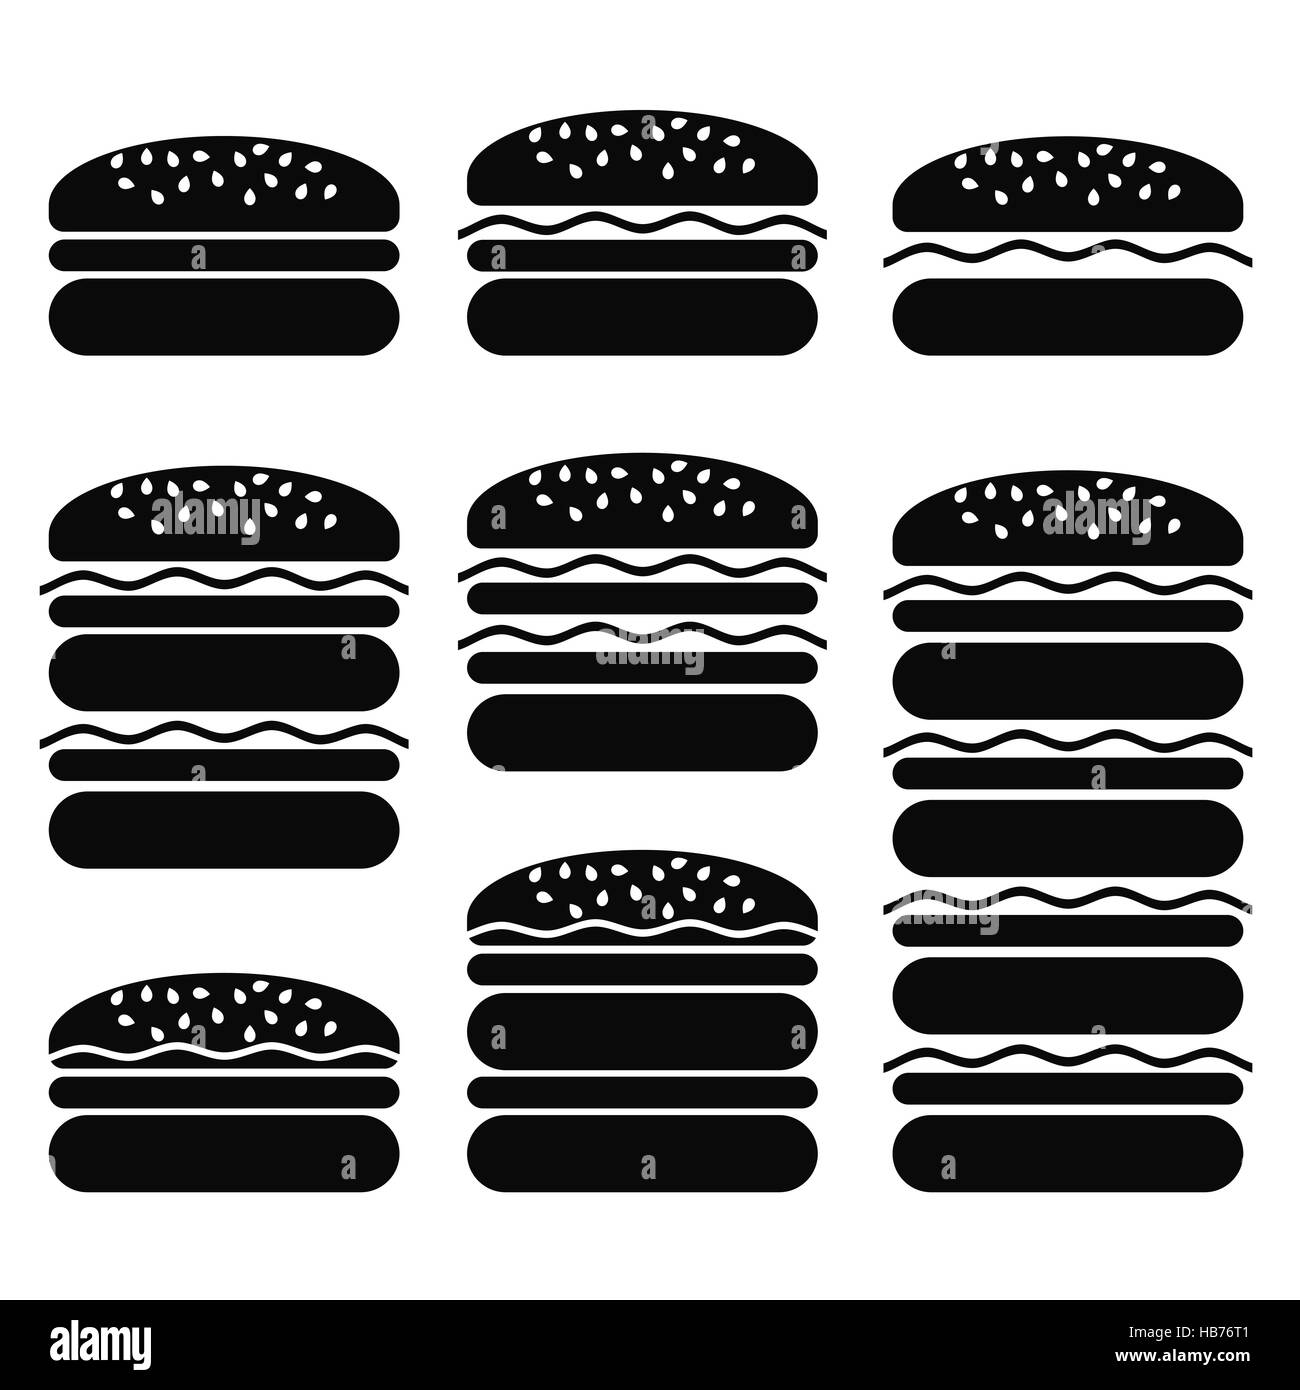 Set of Different Hamburger Icons Stock Photo